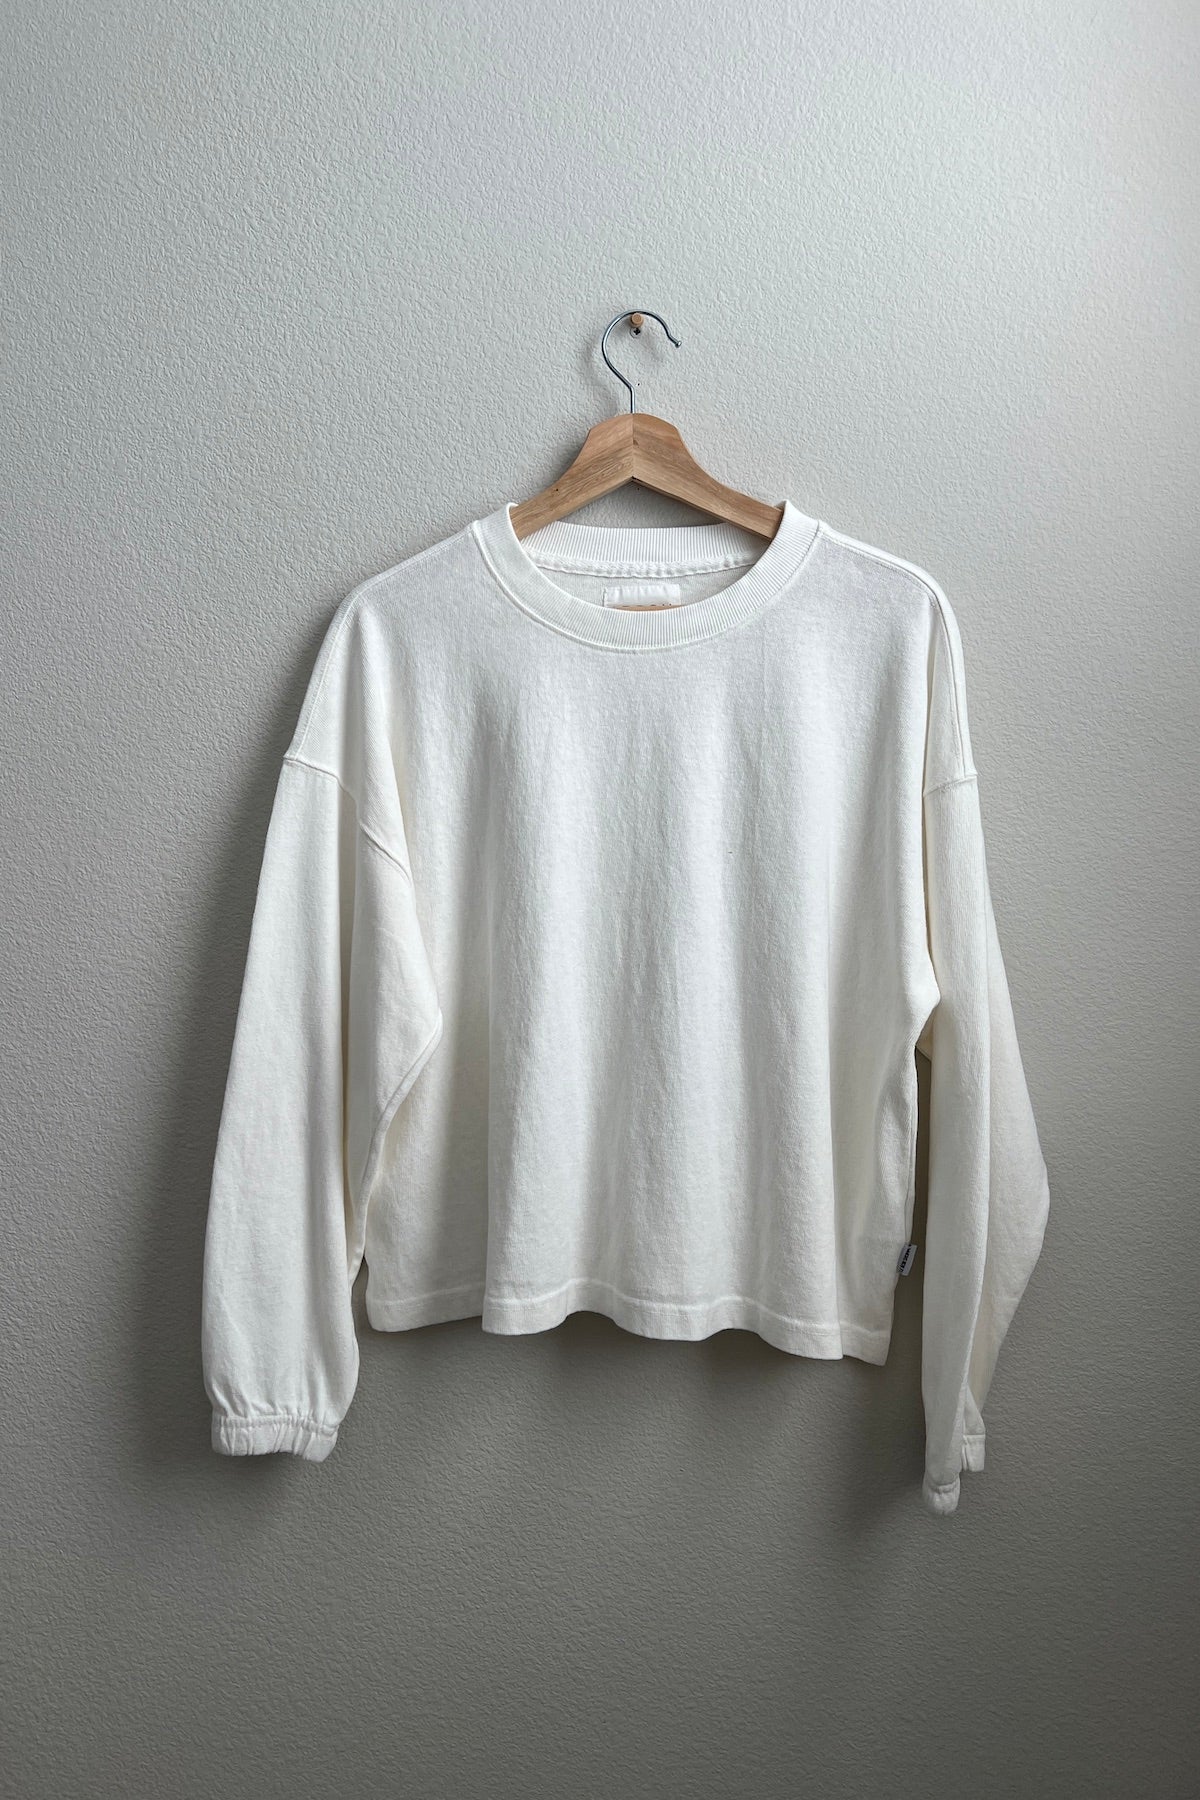 le bon shoppe naturelle long sleeve tee sweatshirt made with organic cotton in white cotton